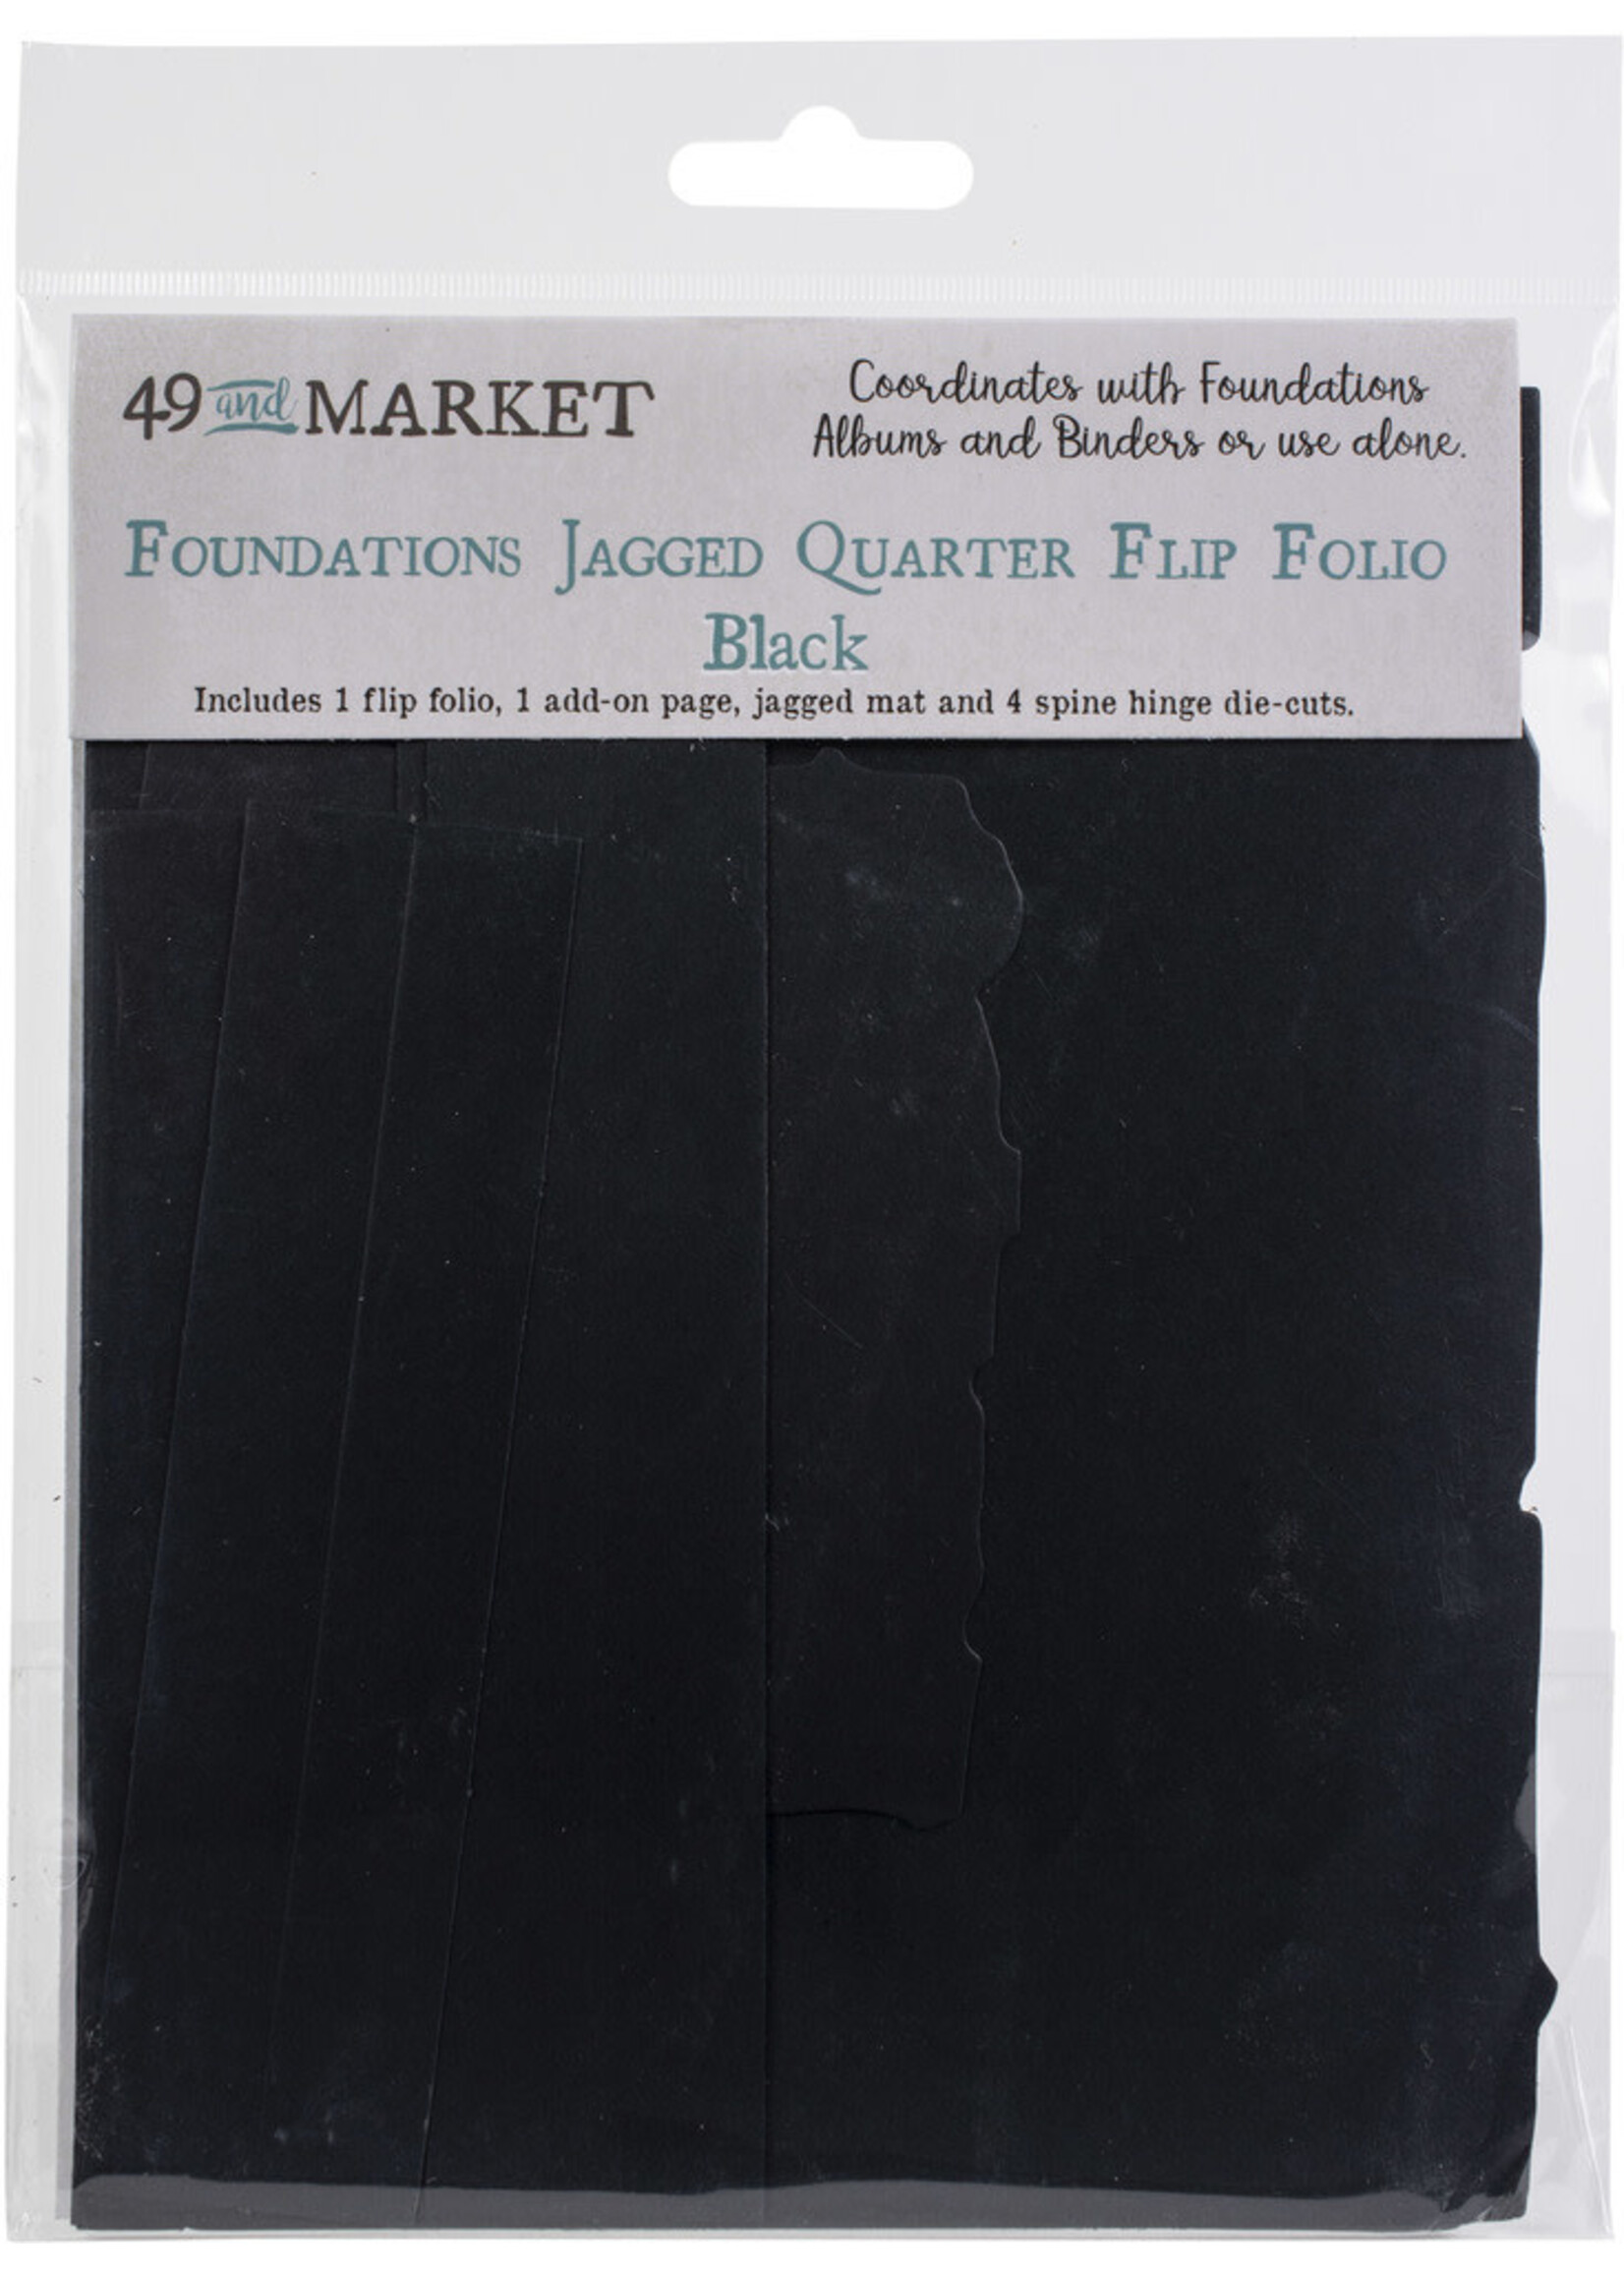 49 & Market 49 and Market Foundations Jagged Quarter Flip Folio, Black